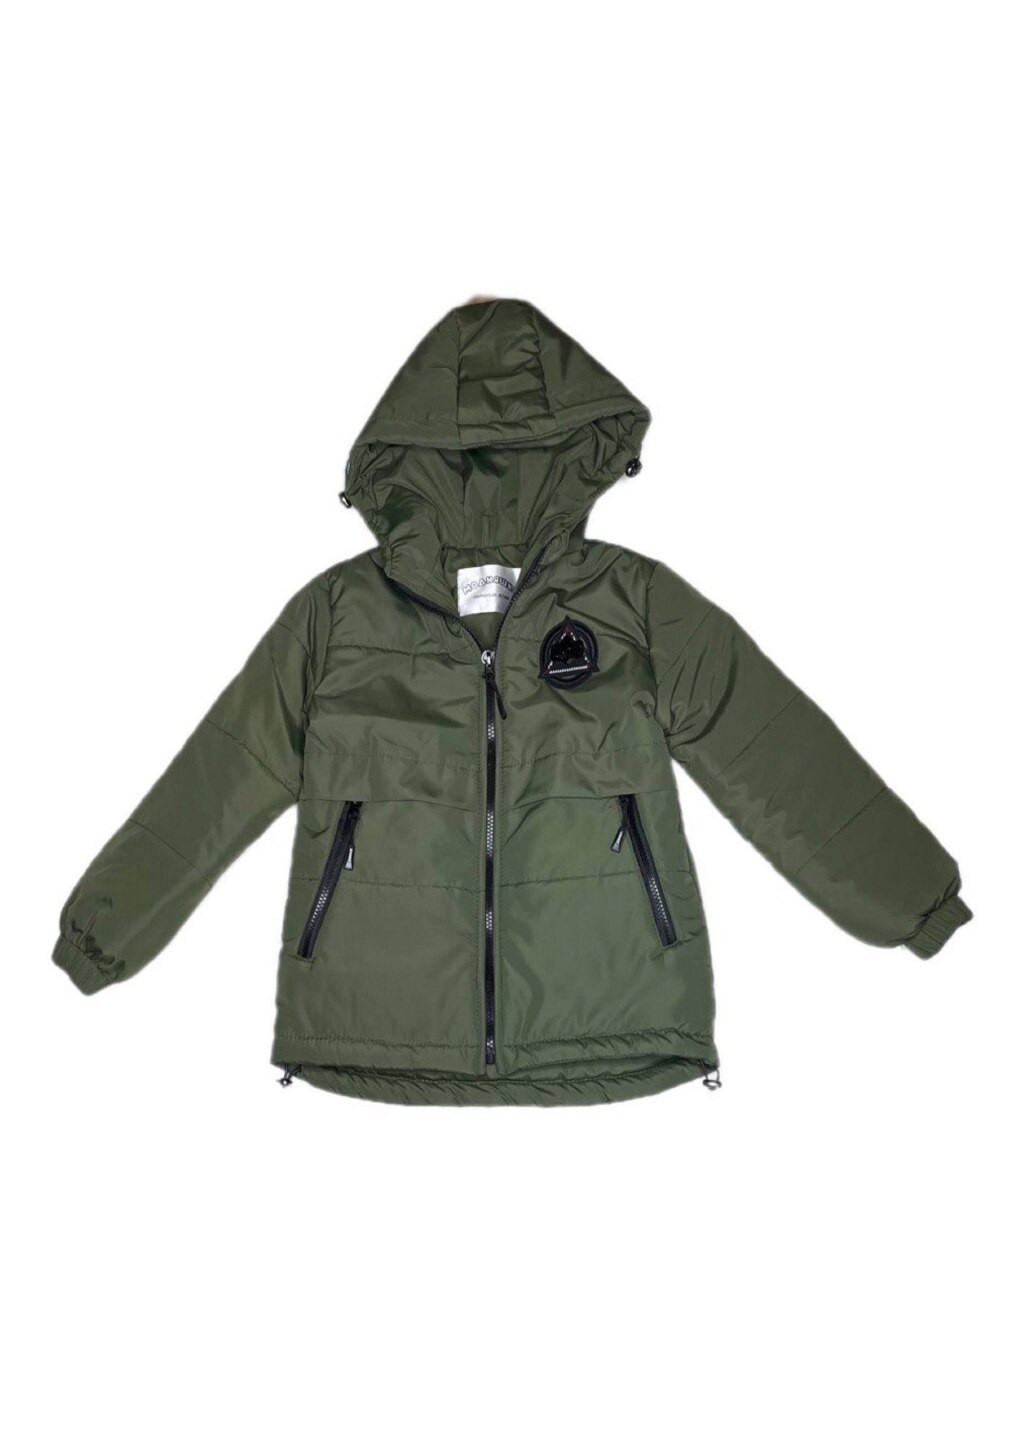 Оливковая (хаки) демисезонная куртка демисезонная для мальчика цвета хаки Модняшки